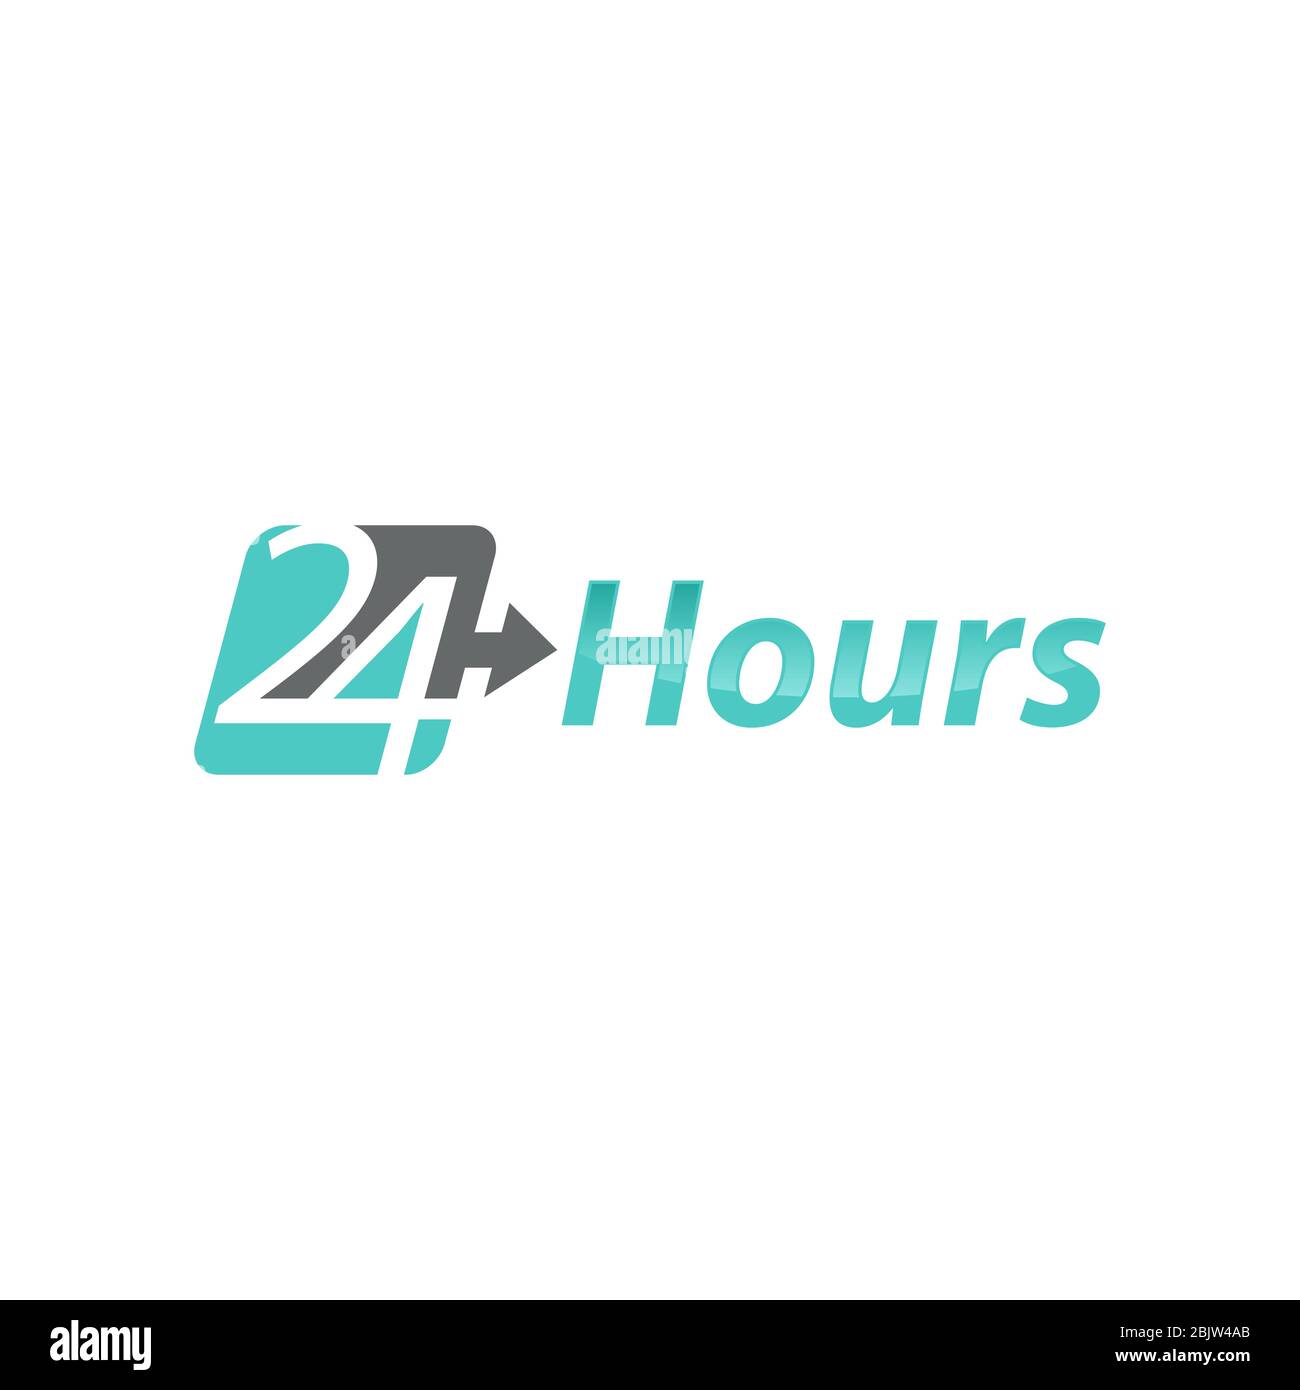 24 Hour Service Icon Flat Graphic Design Stock Vector